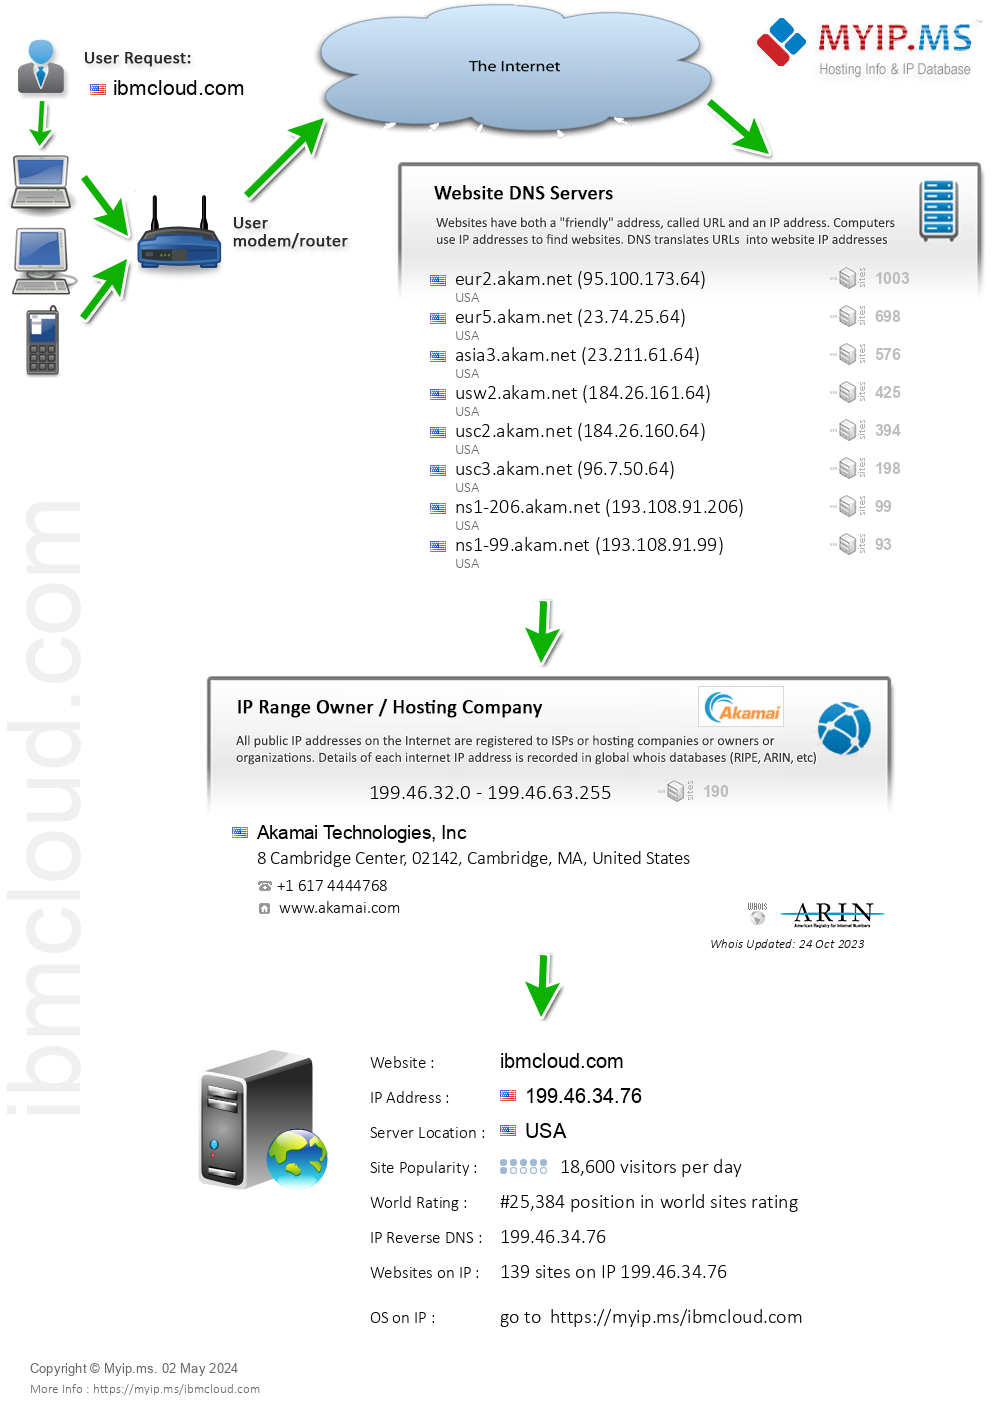 Ibmcloud.com - Website Hosting Visual IP Diagram